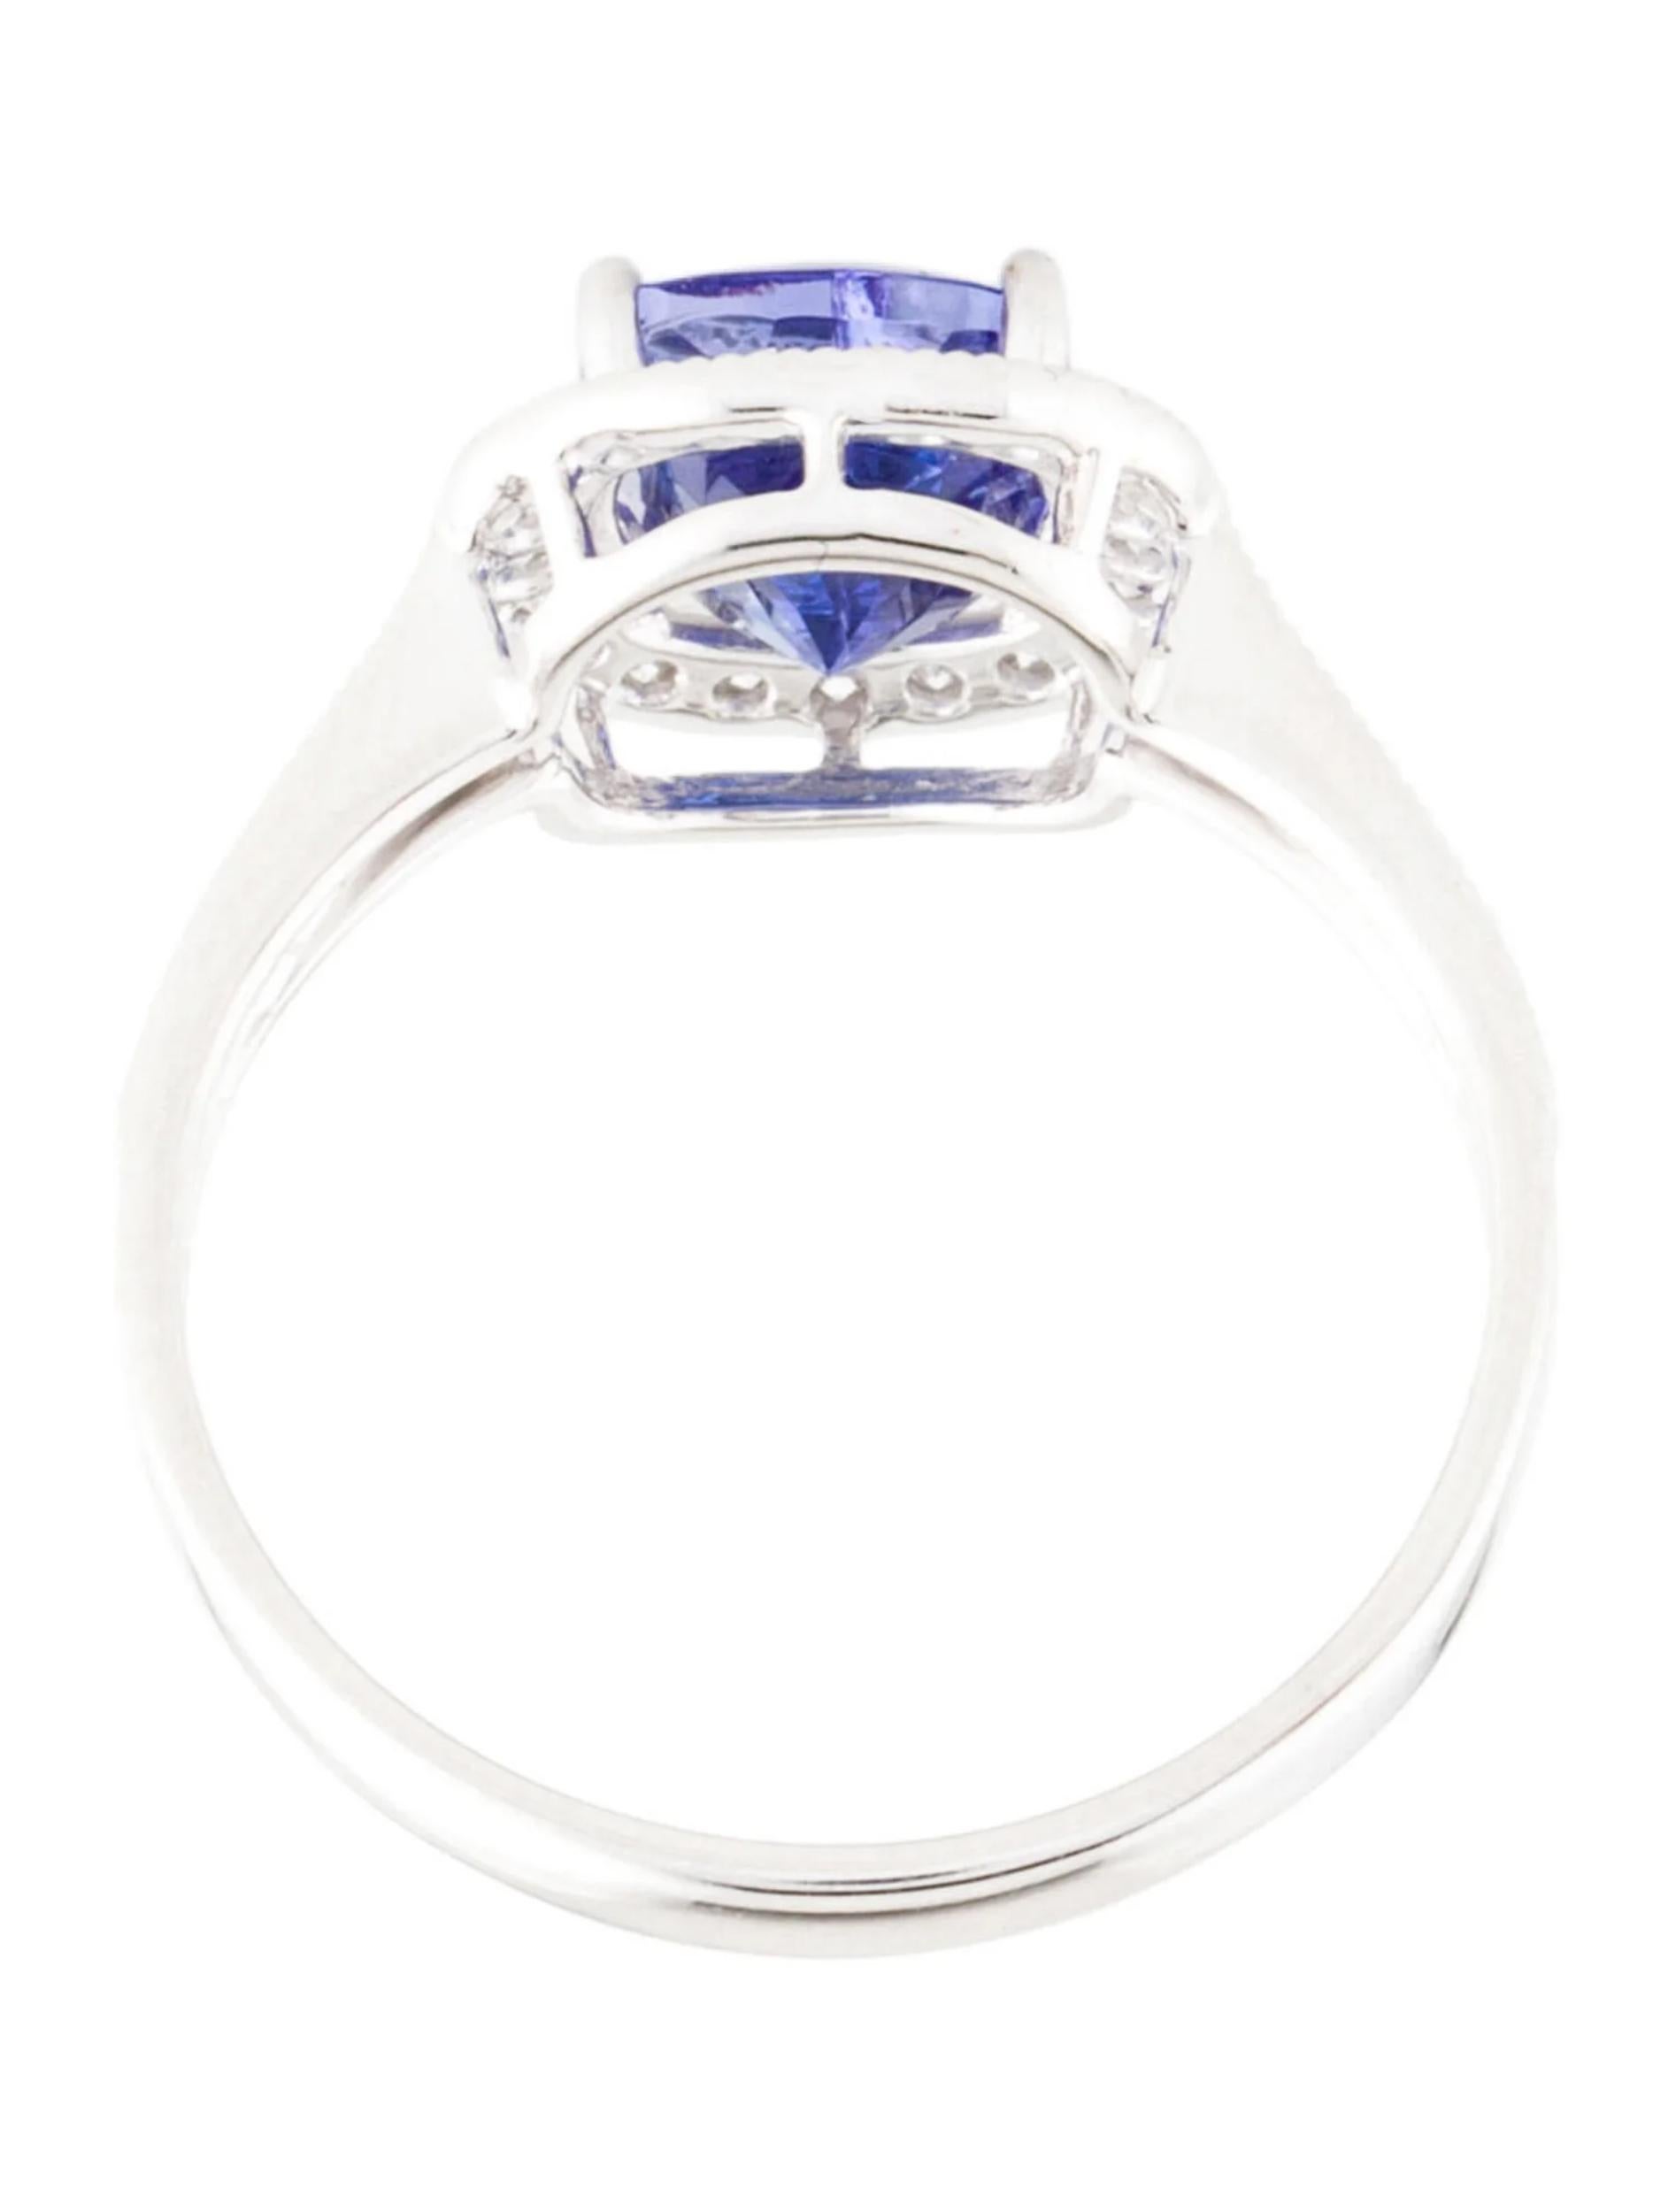 Women's Luxurious 14K 1.80ct Tanzanite & Diamond Cocktail Ring, Size 6.75 - Elegant For Sale